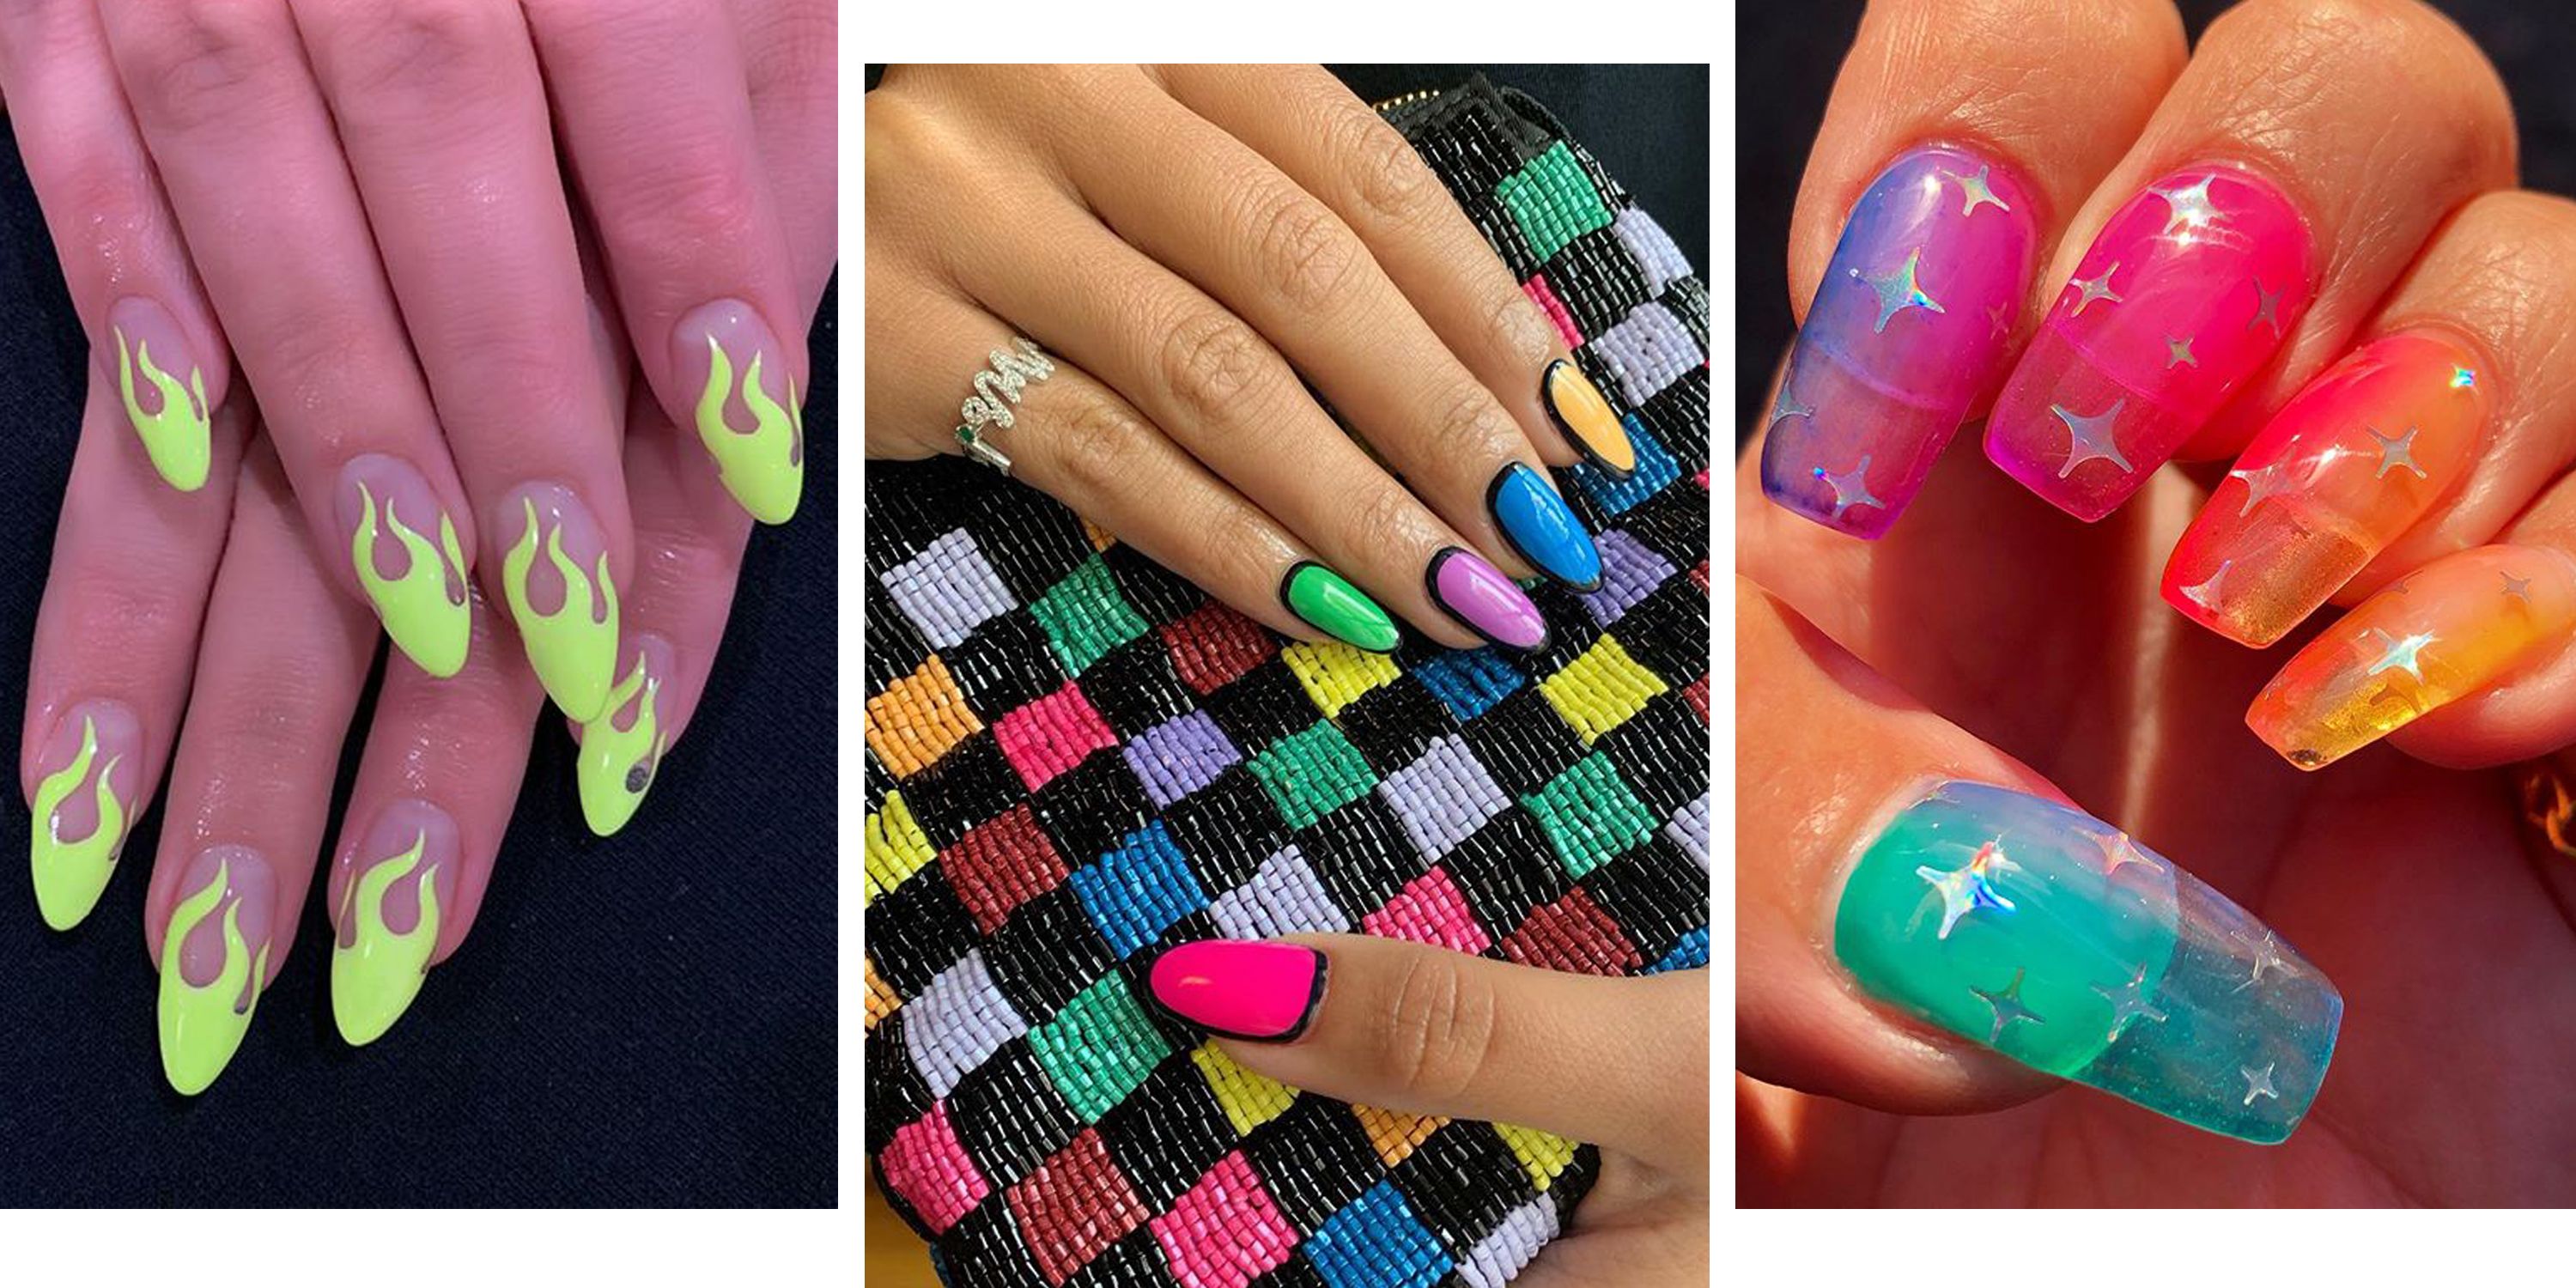 Classy Birthday Nails And Nail Ideas For An Elegant Lady | Boho nails,  Floral nails, Stylish nails